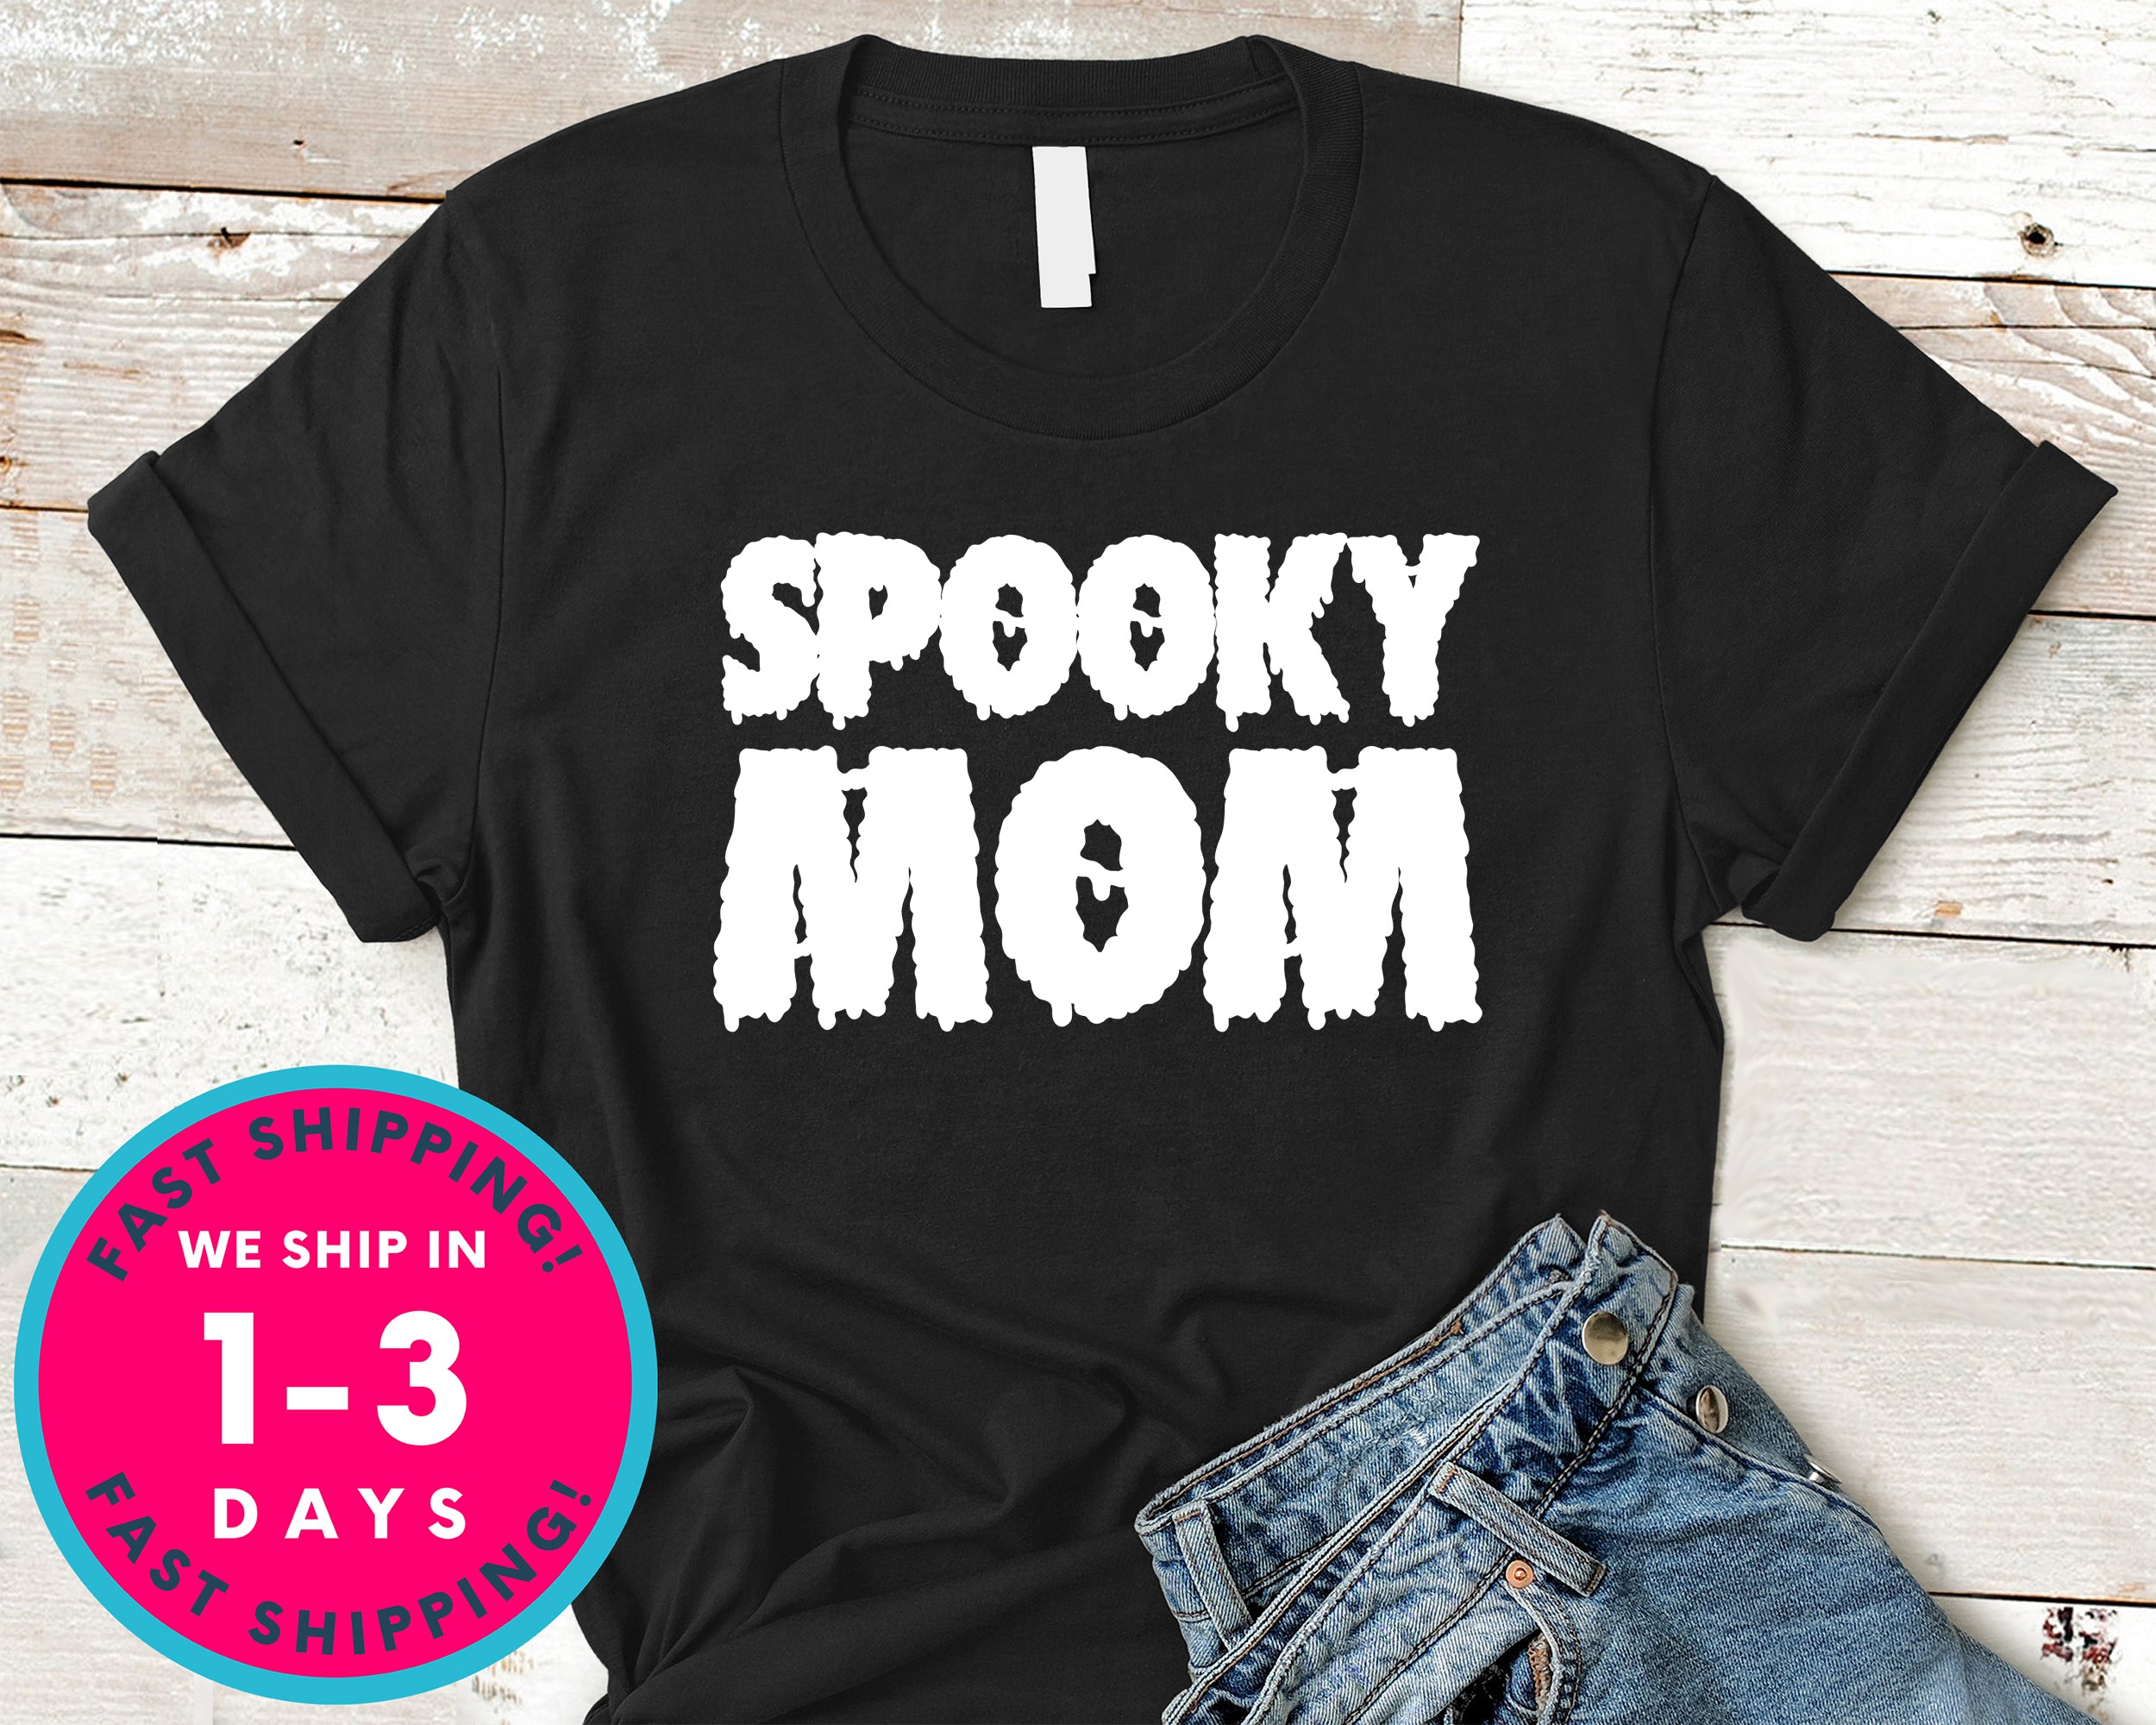 Spooky Mom (couple Tee) T-Shirt - Halloween Horror Scary Shirt